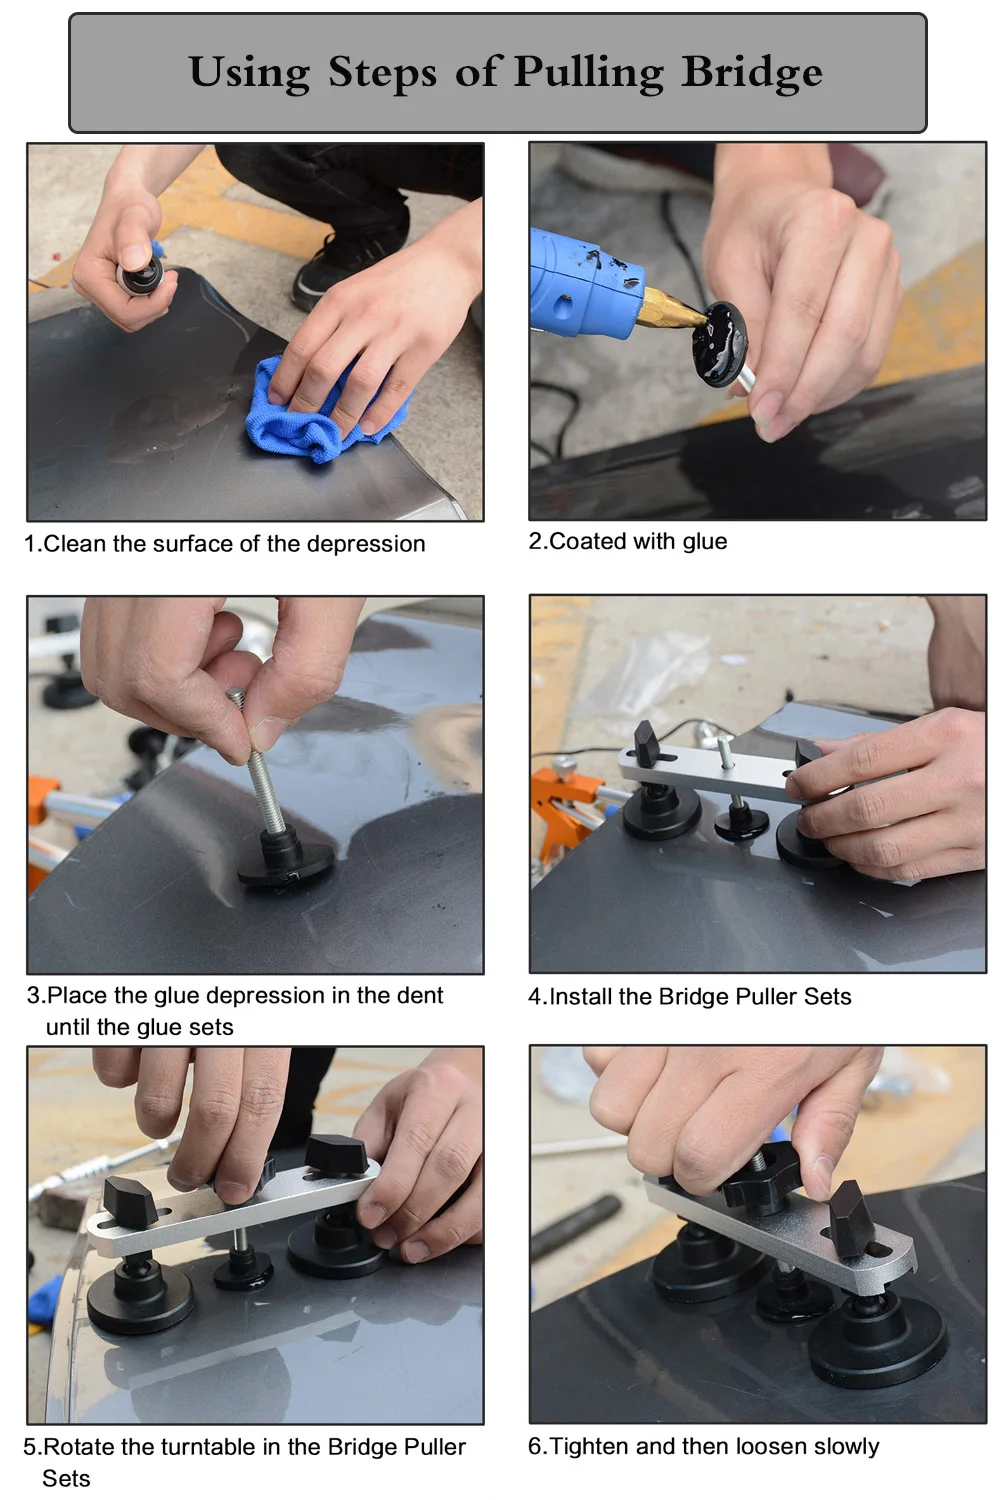 Whdz PDR инструменты Paintless вмятина Инструменты для ремонта автомобиля град Repair Tool термоклей палочки клеевой пистолет puller Tabs комплект Ferramentas